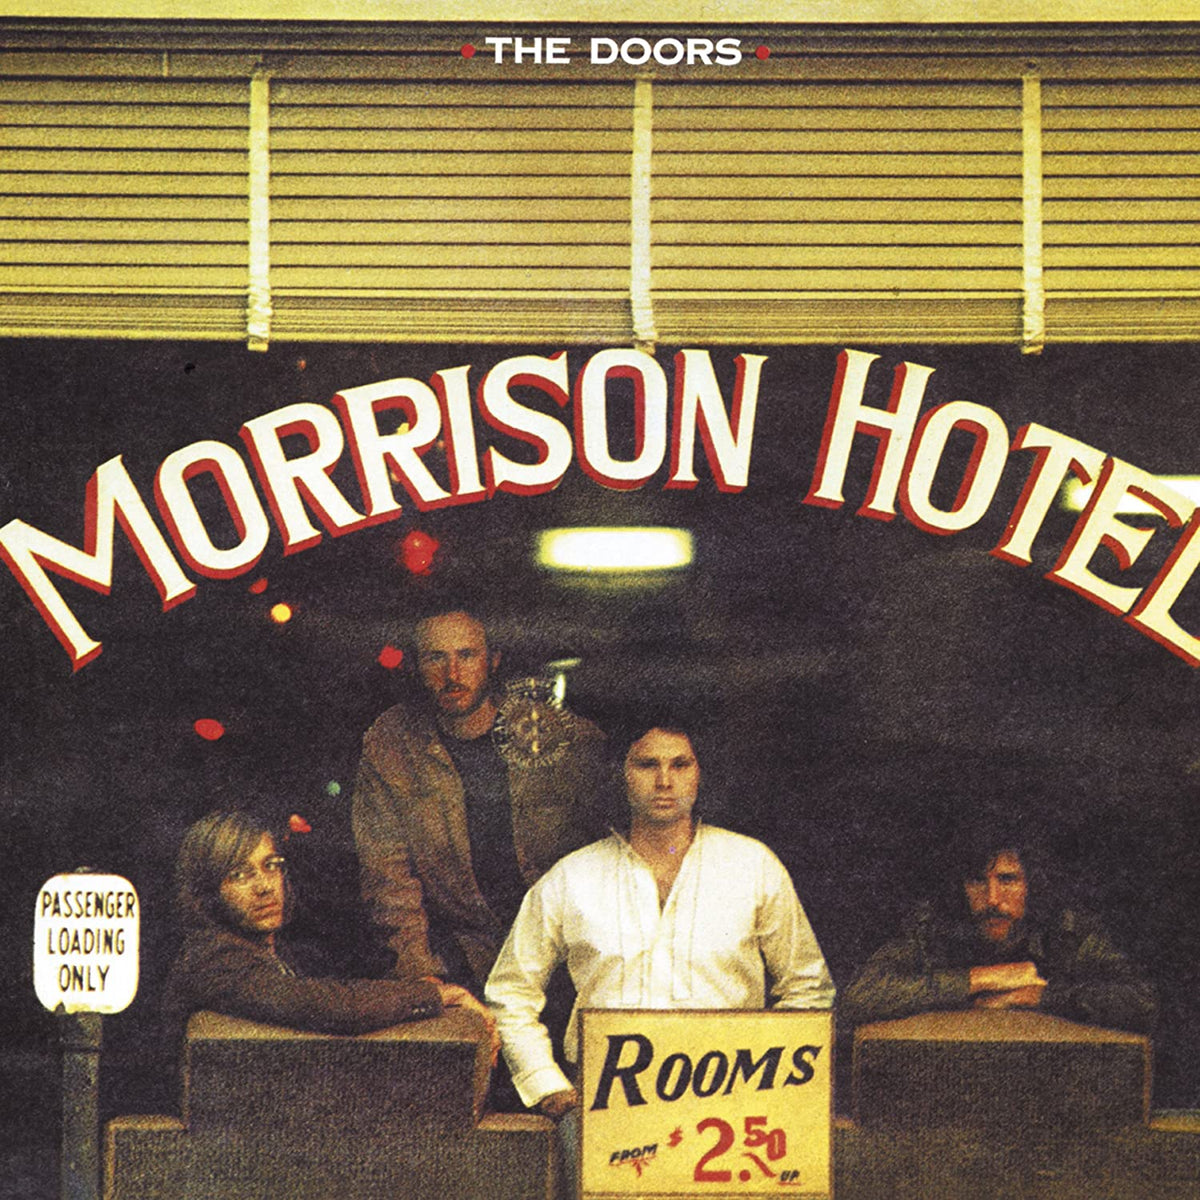 The Doors - Morrison Hotel LP (180g, Original Stereo Mixes)